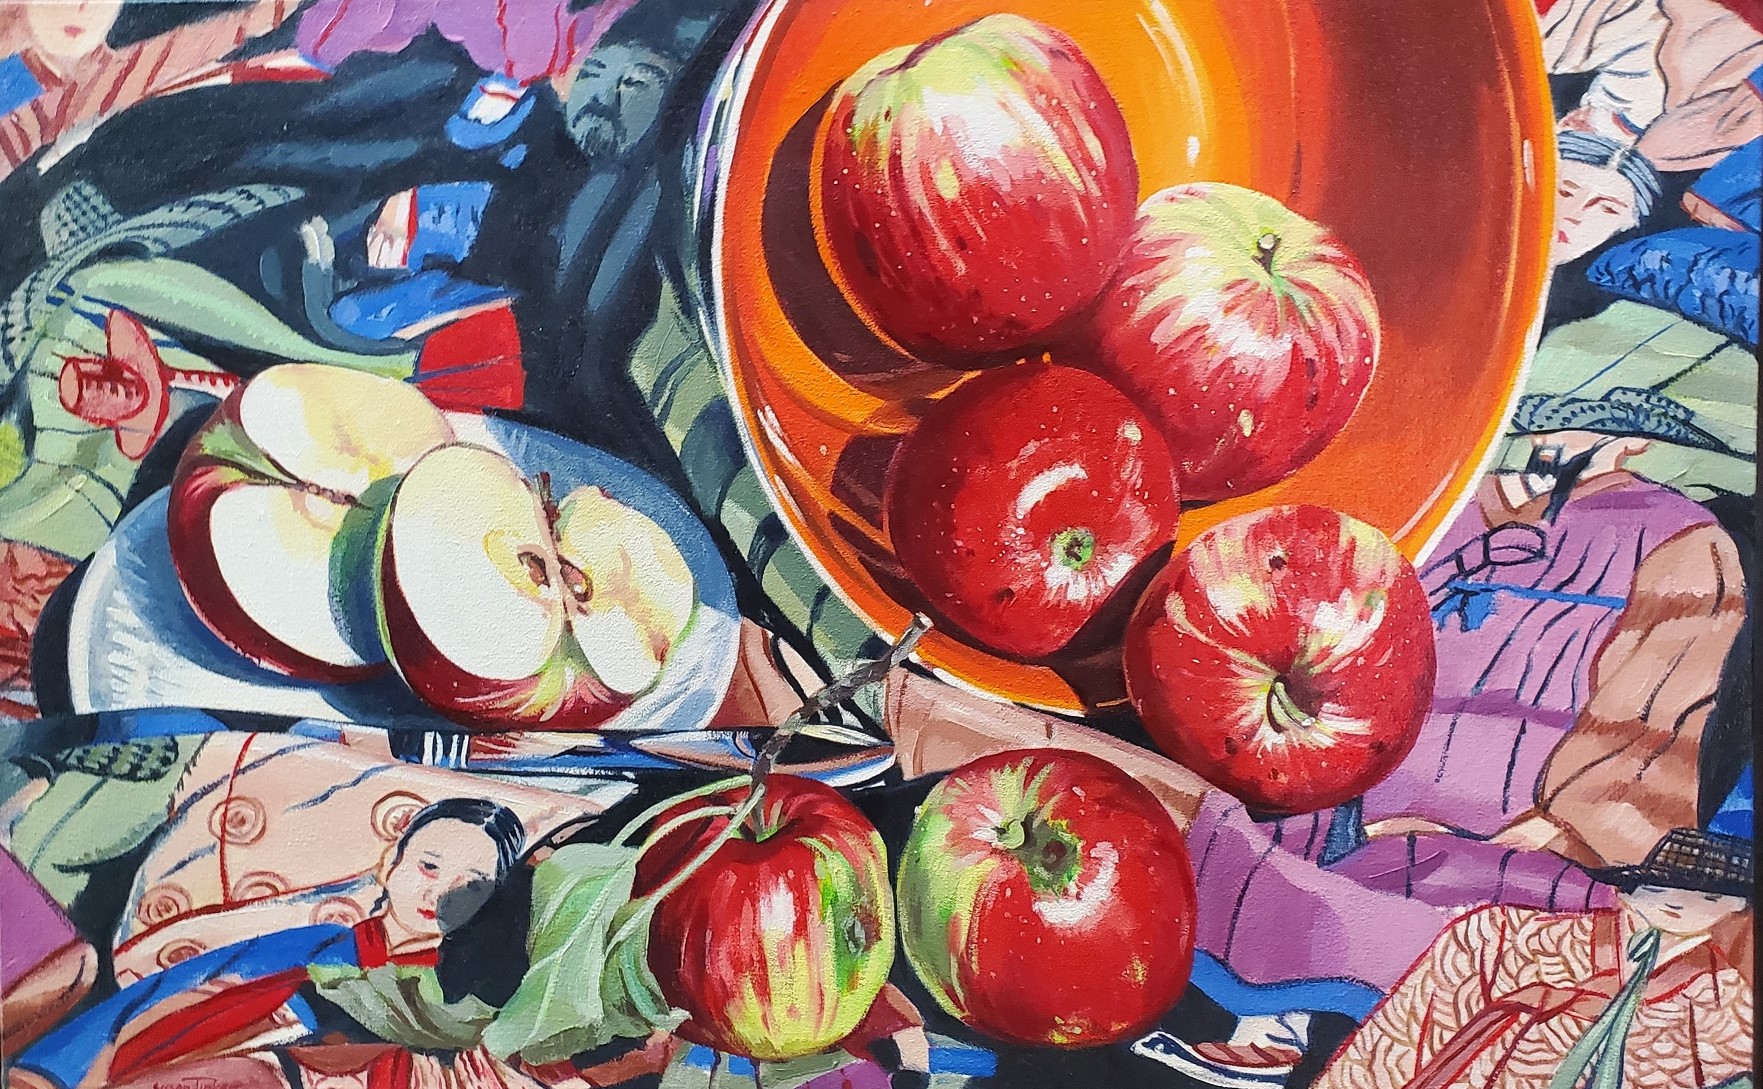 Susan Tinker, “Apple Season”, oil on canvas